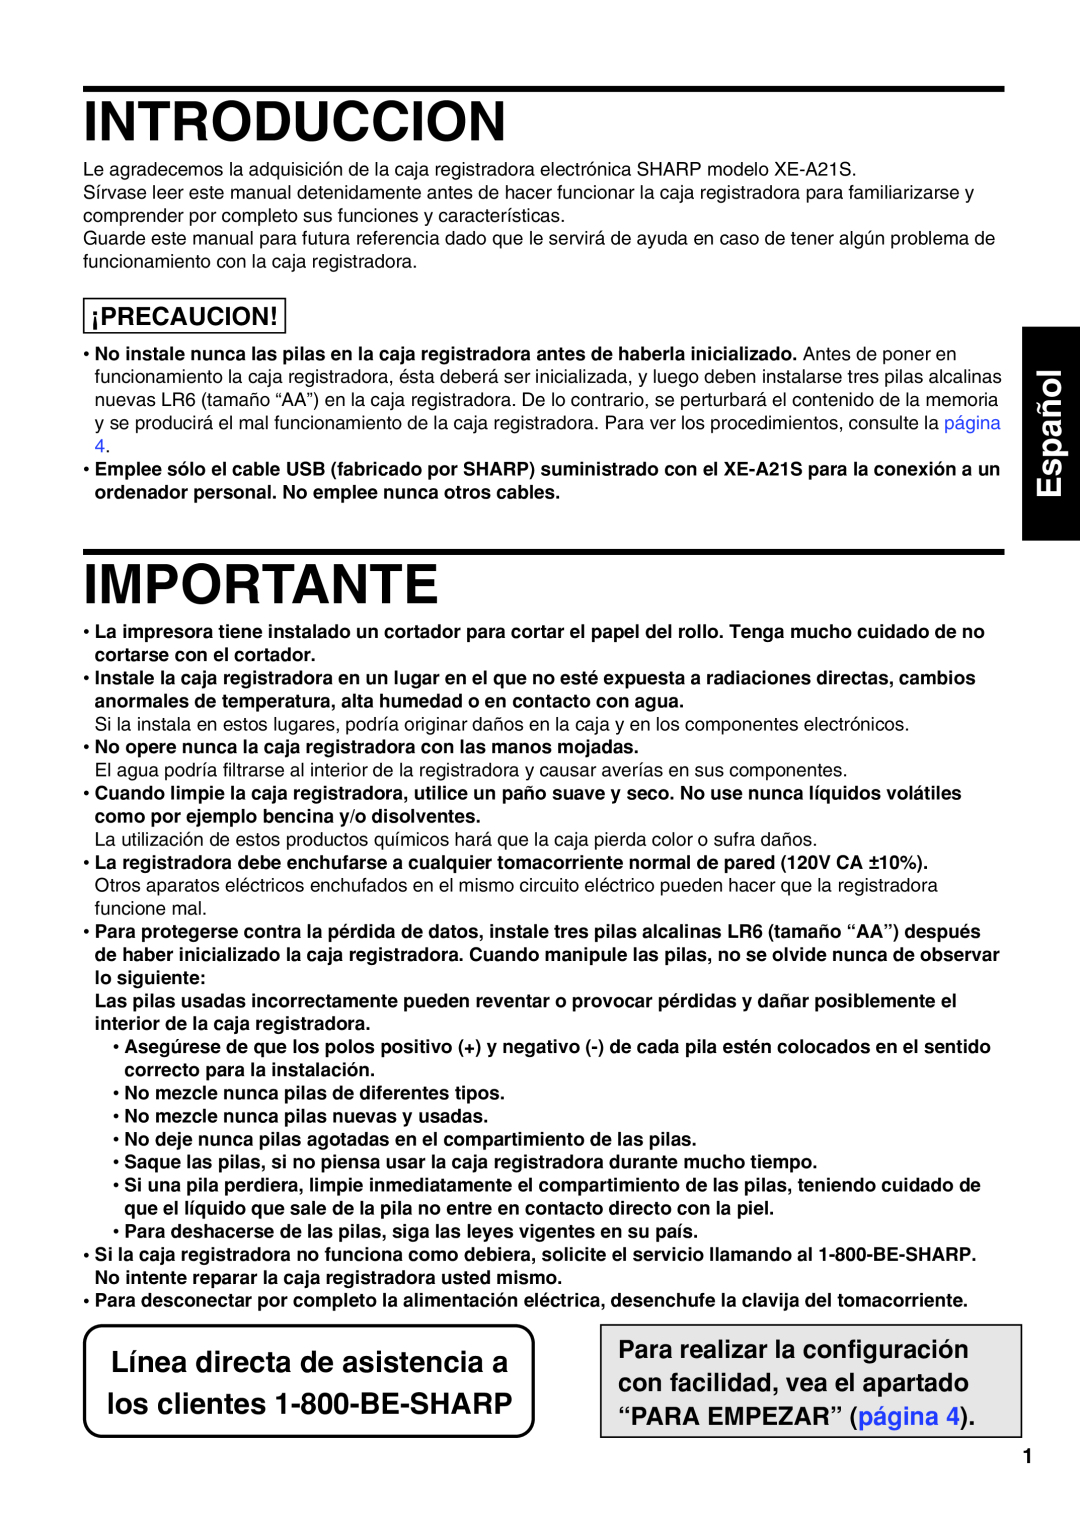 Sharp XE-A21S Introduccion, Importante, English Español, Línea directa de asistencia a, los clientes 1-800-BE-SHARP 